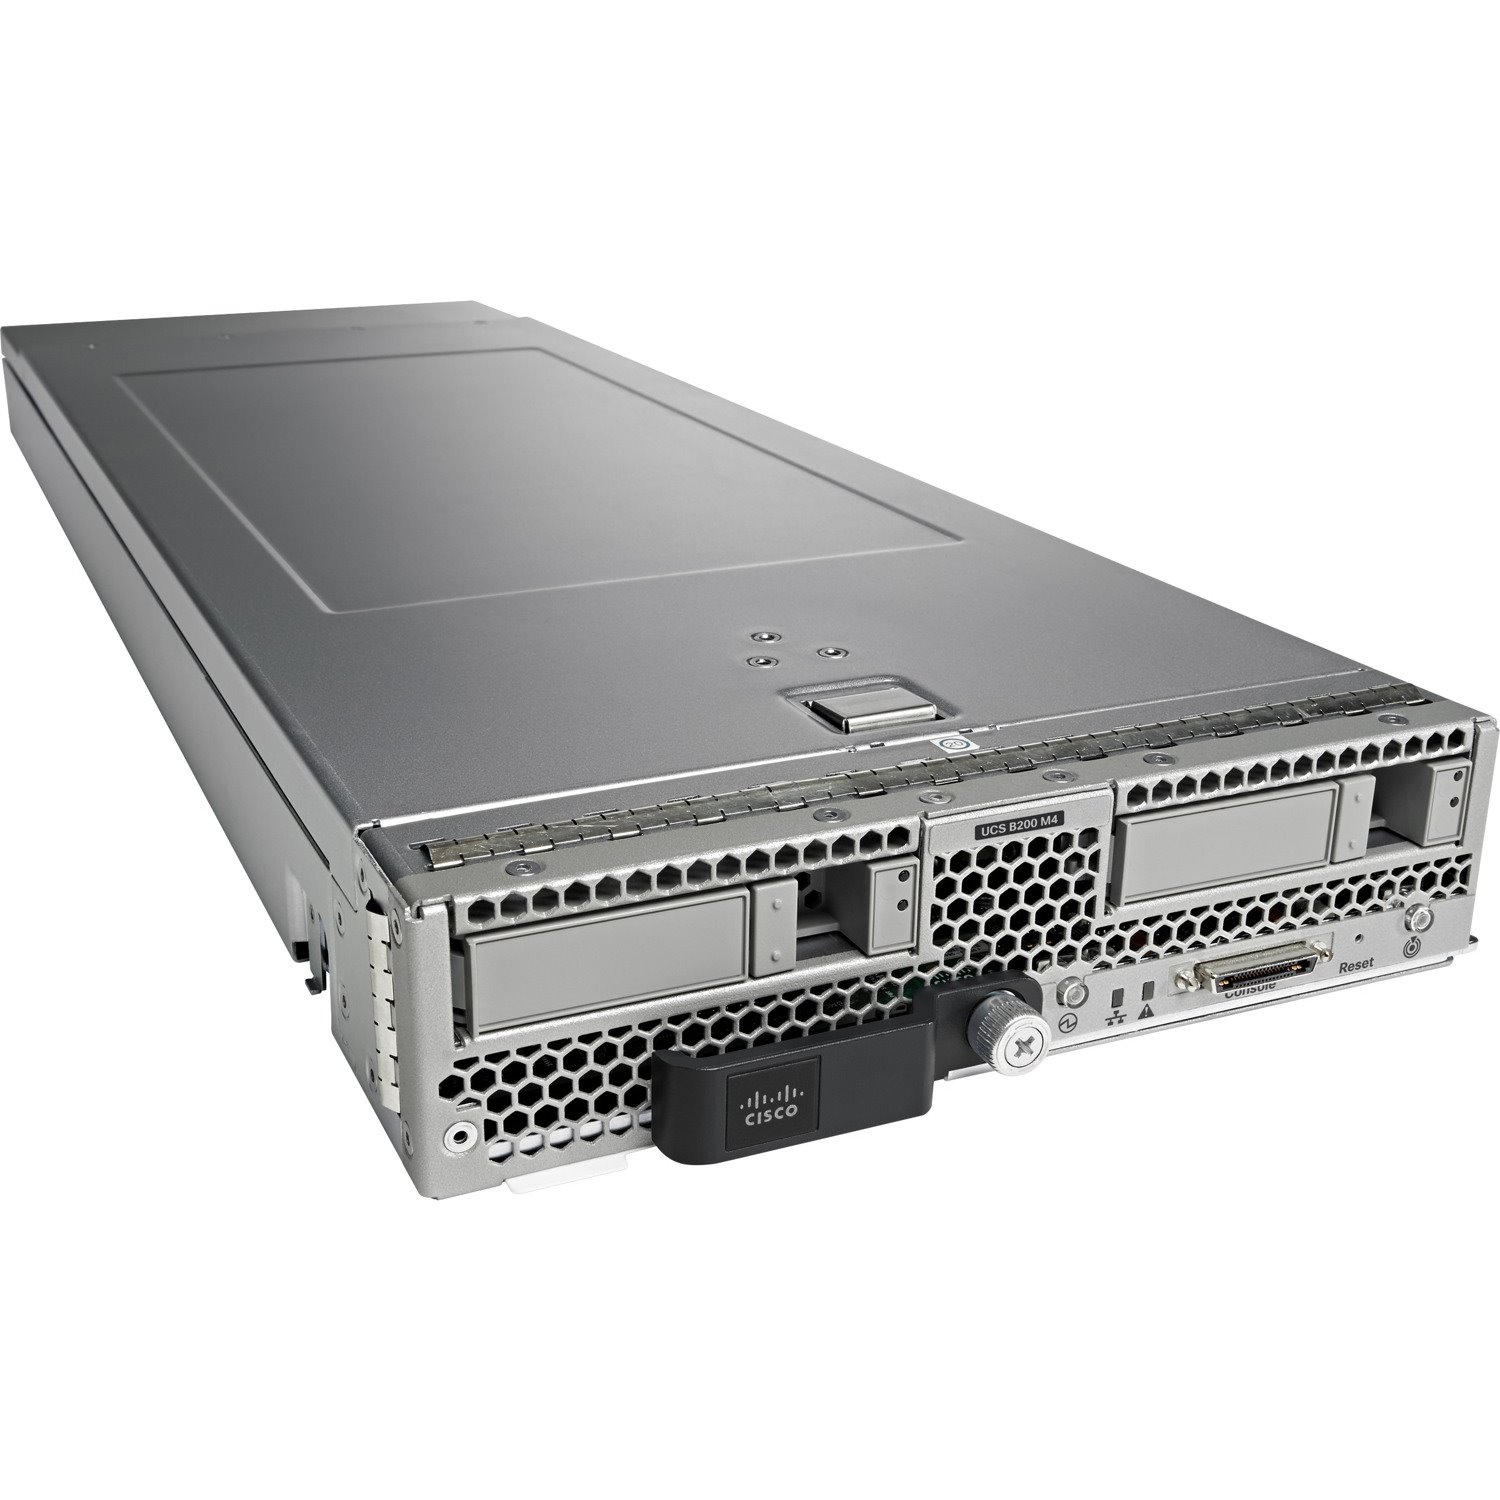 Cisco B200 M4 Blade Server - 2 x Intel Xeon E5-2637 v4 3.50 GHz - 256 GB RAM - Serial ATA/600, 12Gb/s SAS Controller